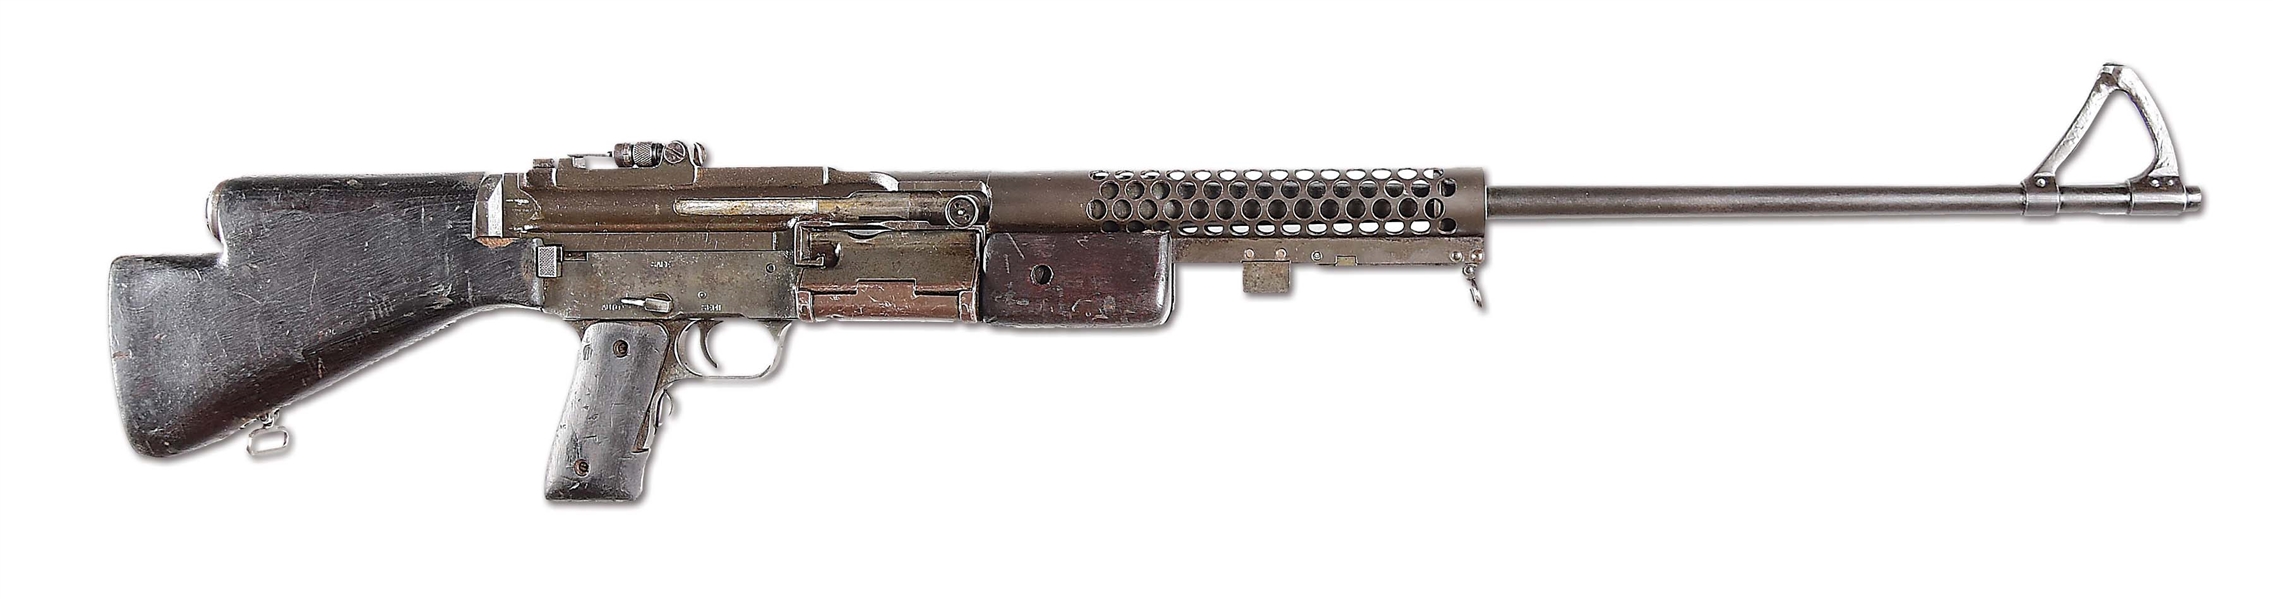 (N) RARE AND HIGHLY SOUGHT PRE-86 DEALER SAMPLE CRANSTON ARMS JOHNSON MODEL 1941 MACHINE GUN (PRE-86 DEALER SAMPLE).